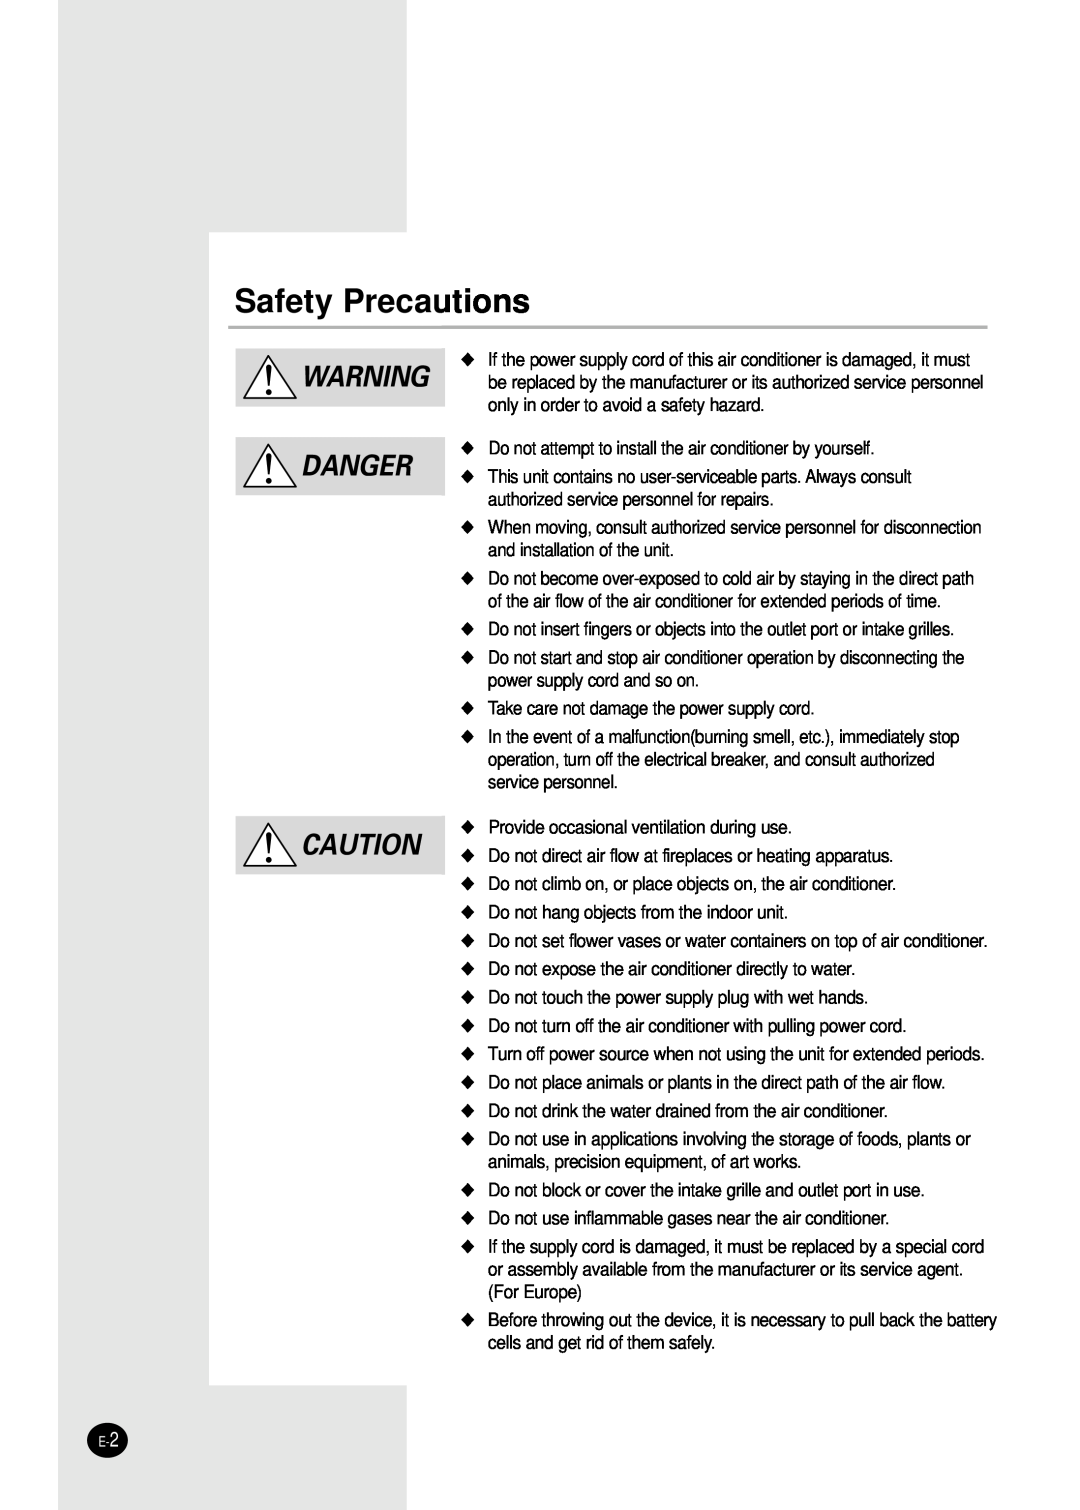 Samsung US09SBGE, US12SGGE, US09S8GB, US12SGGB, US09S8GE, US18S0GB, US12SBGE, US14SGGB, US07SBGE Safety Precautions, Danger 